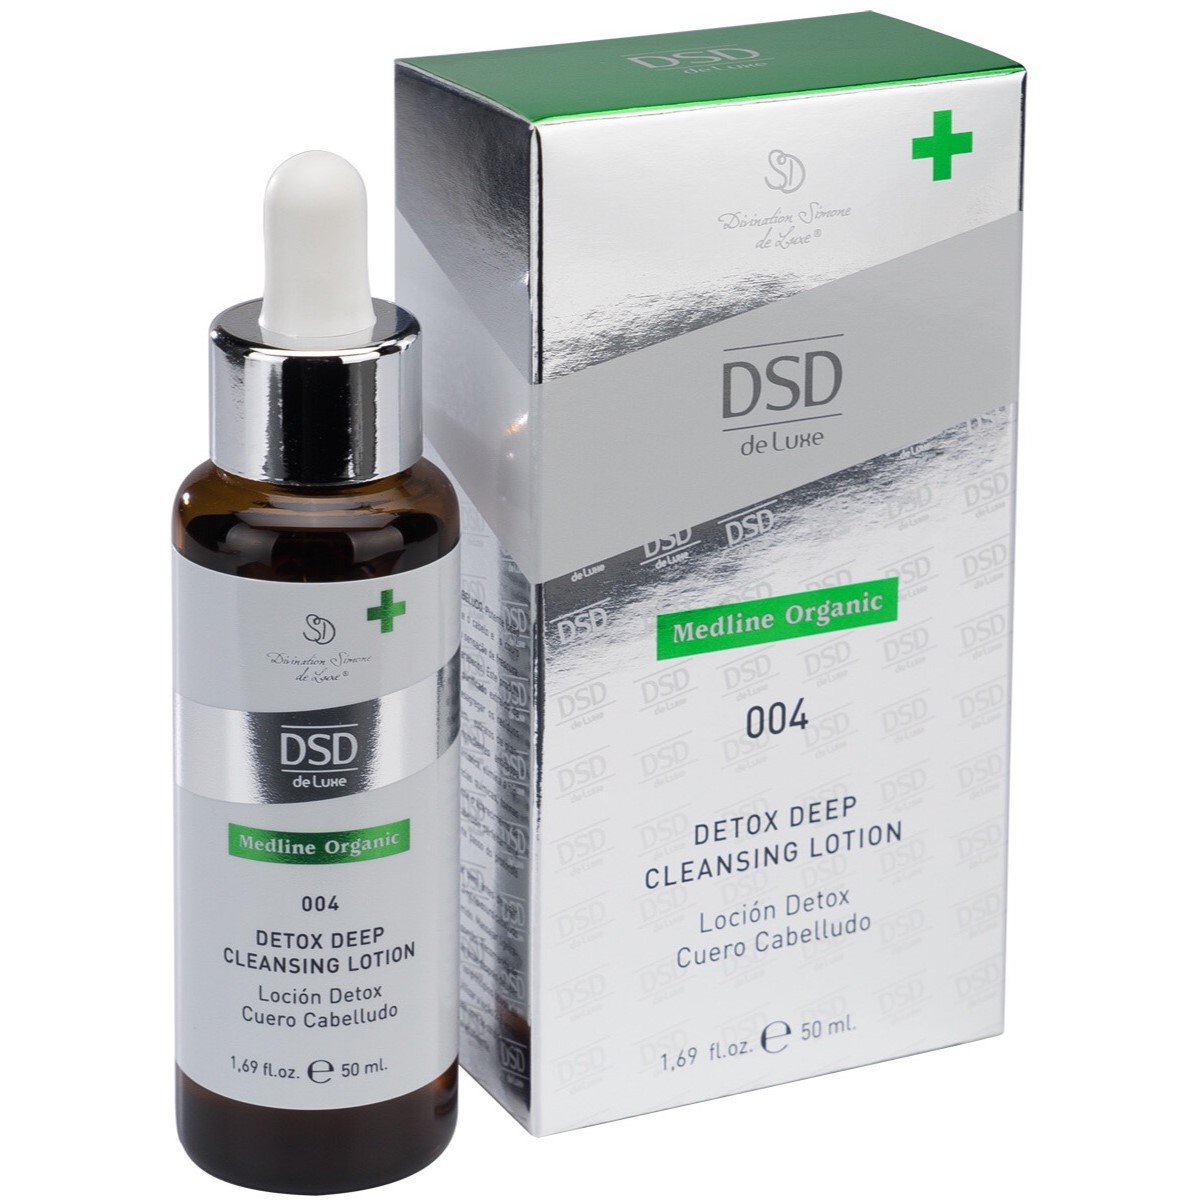 Детокс-лосьон DSD de Luxe 004 Medline Organic Detox Deep Cleansing Lotion, 50 мл - фото 1